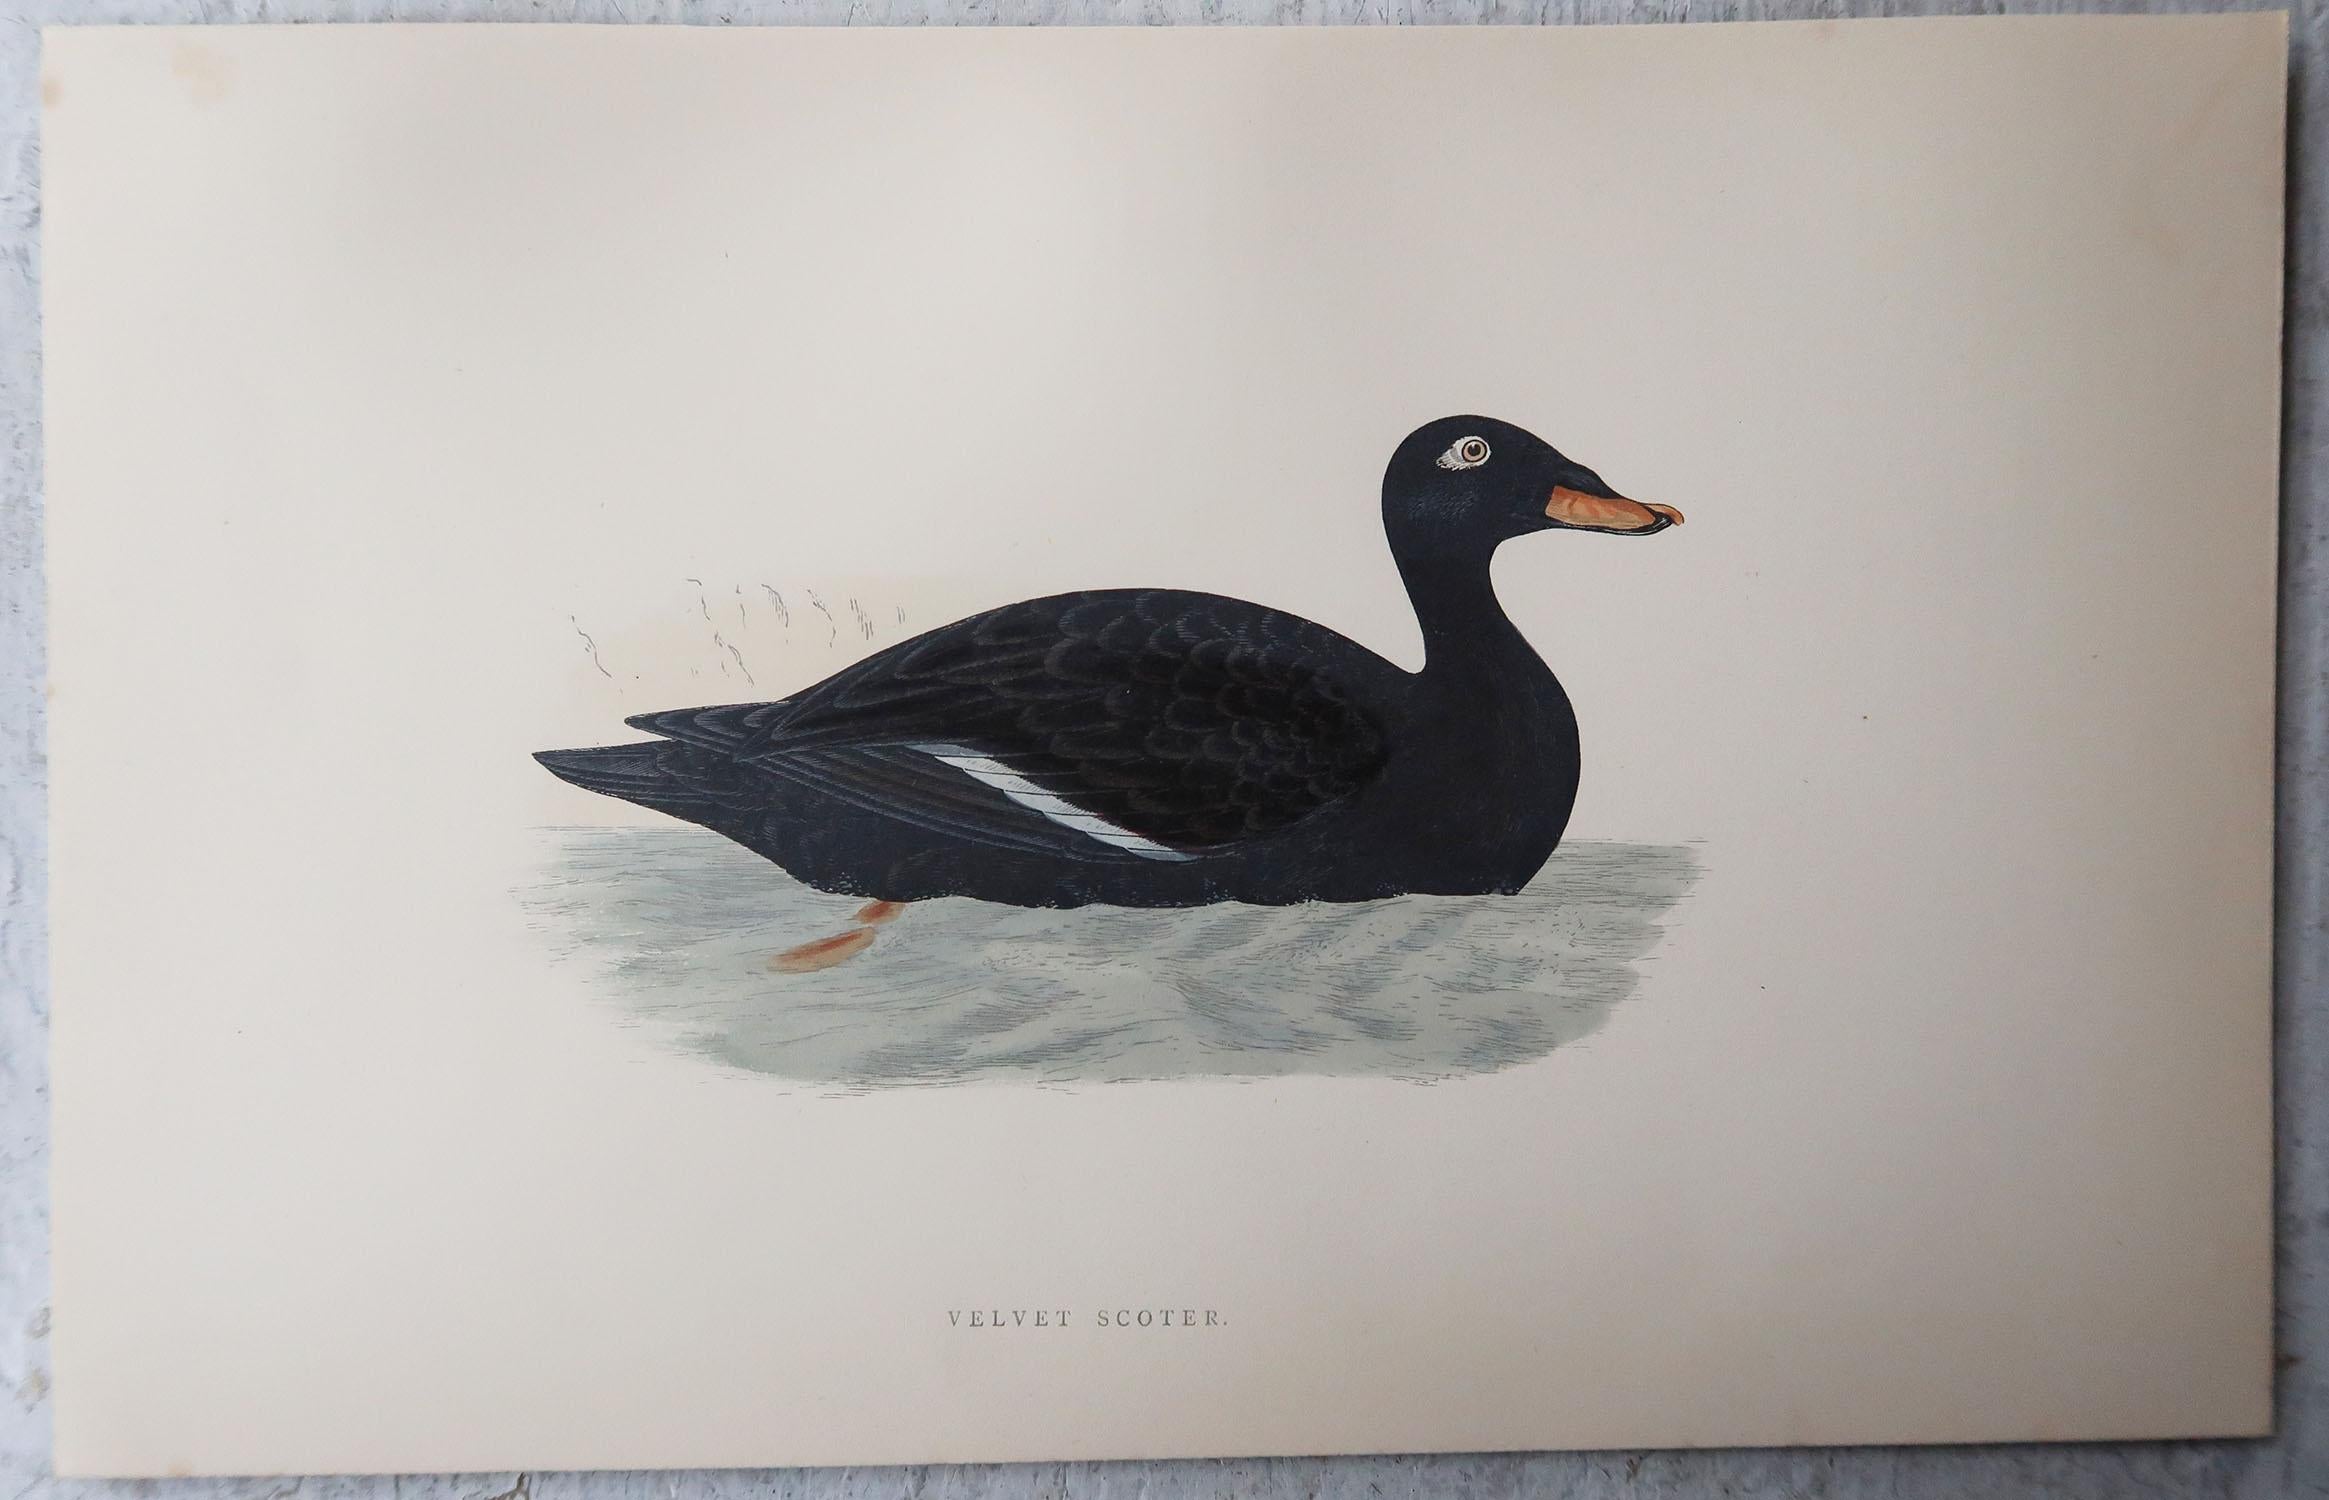 Paper Set of 10 Original Antique Prints of Ducks After Francis Lydon, C.1880